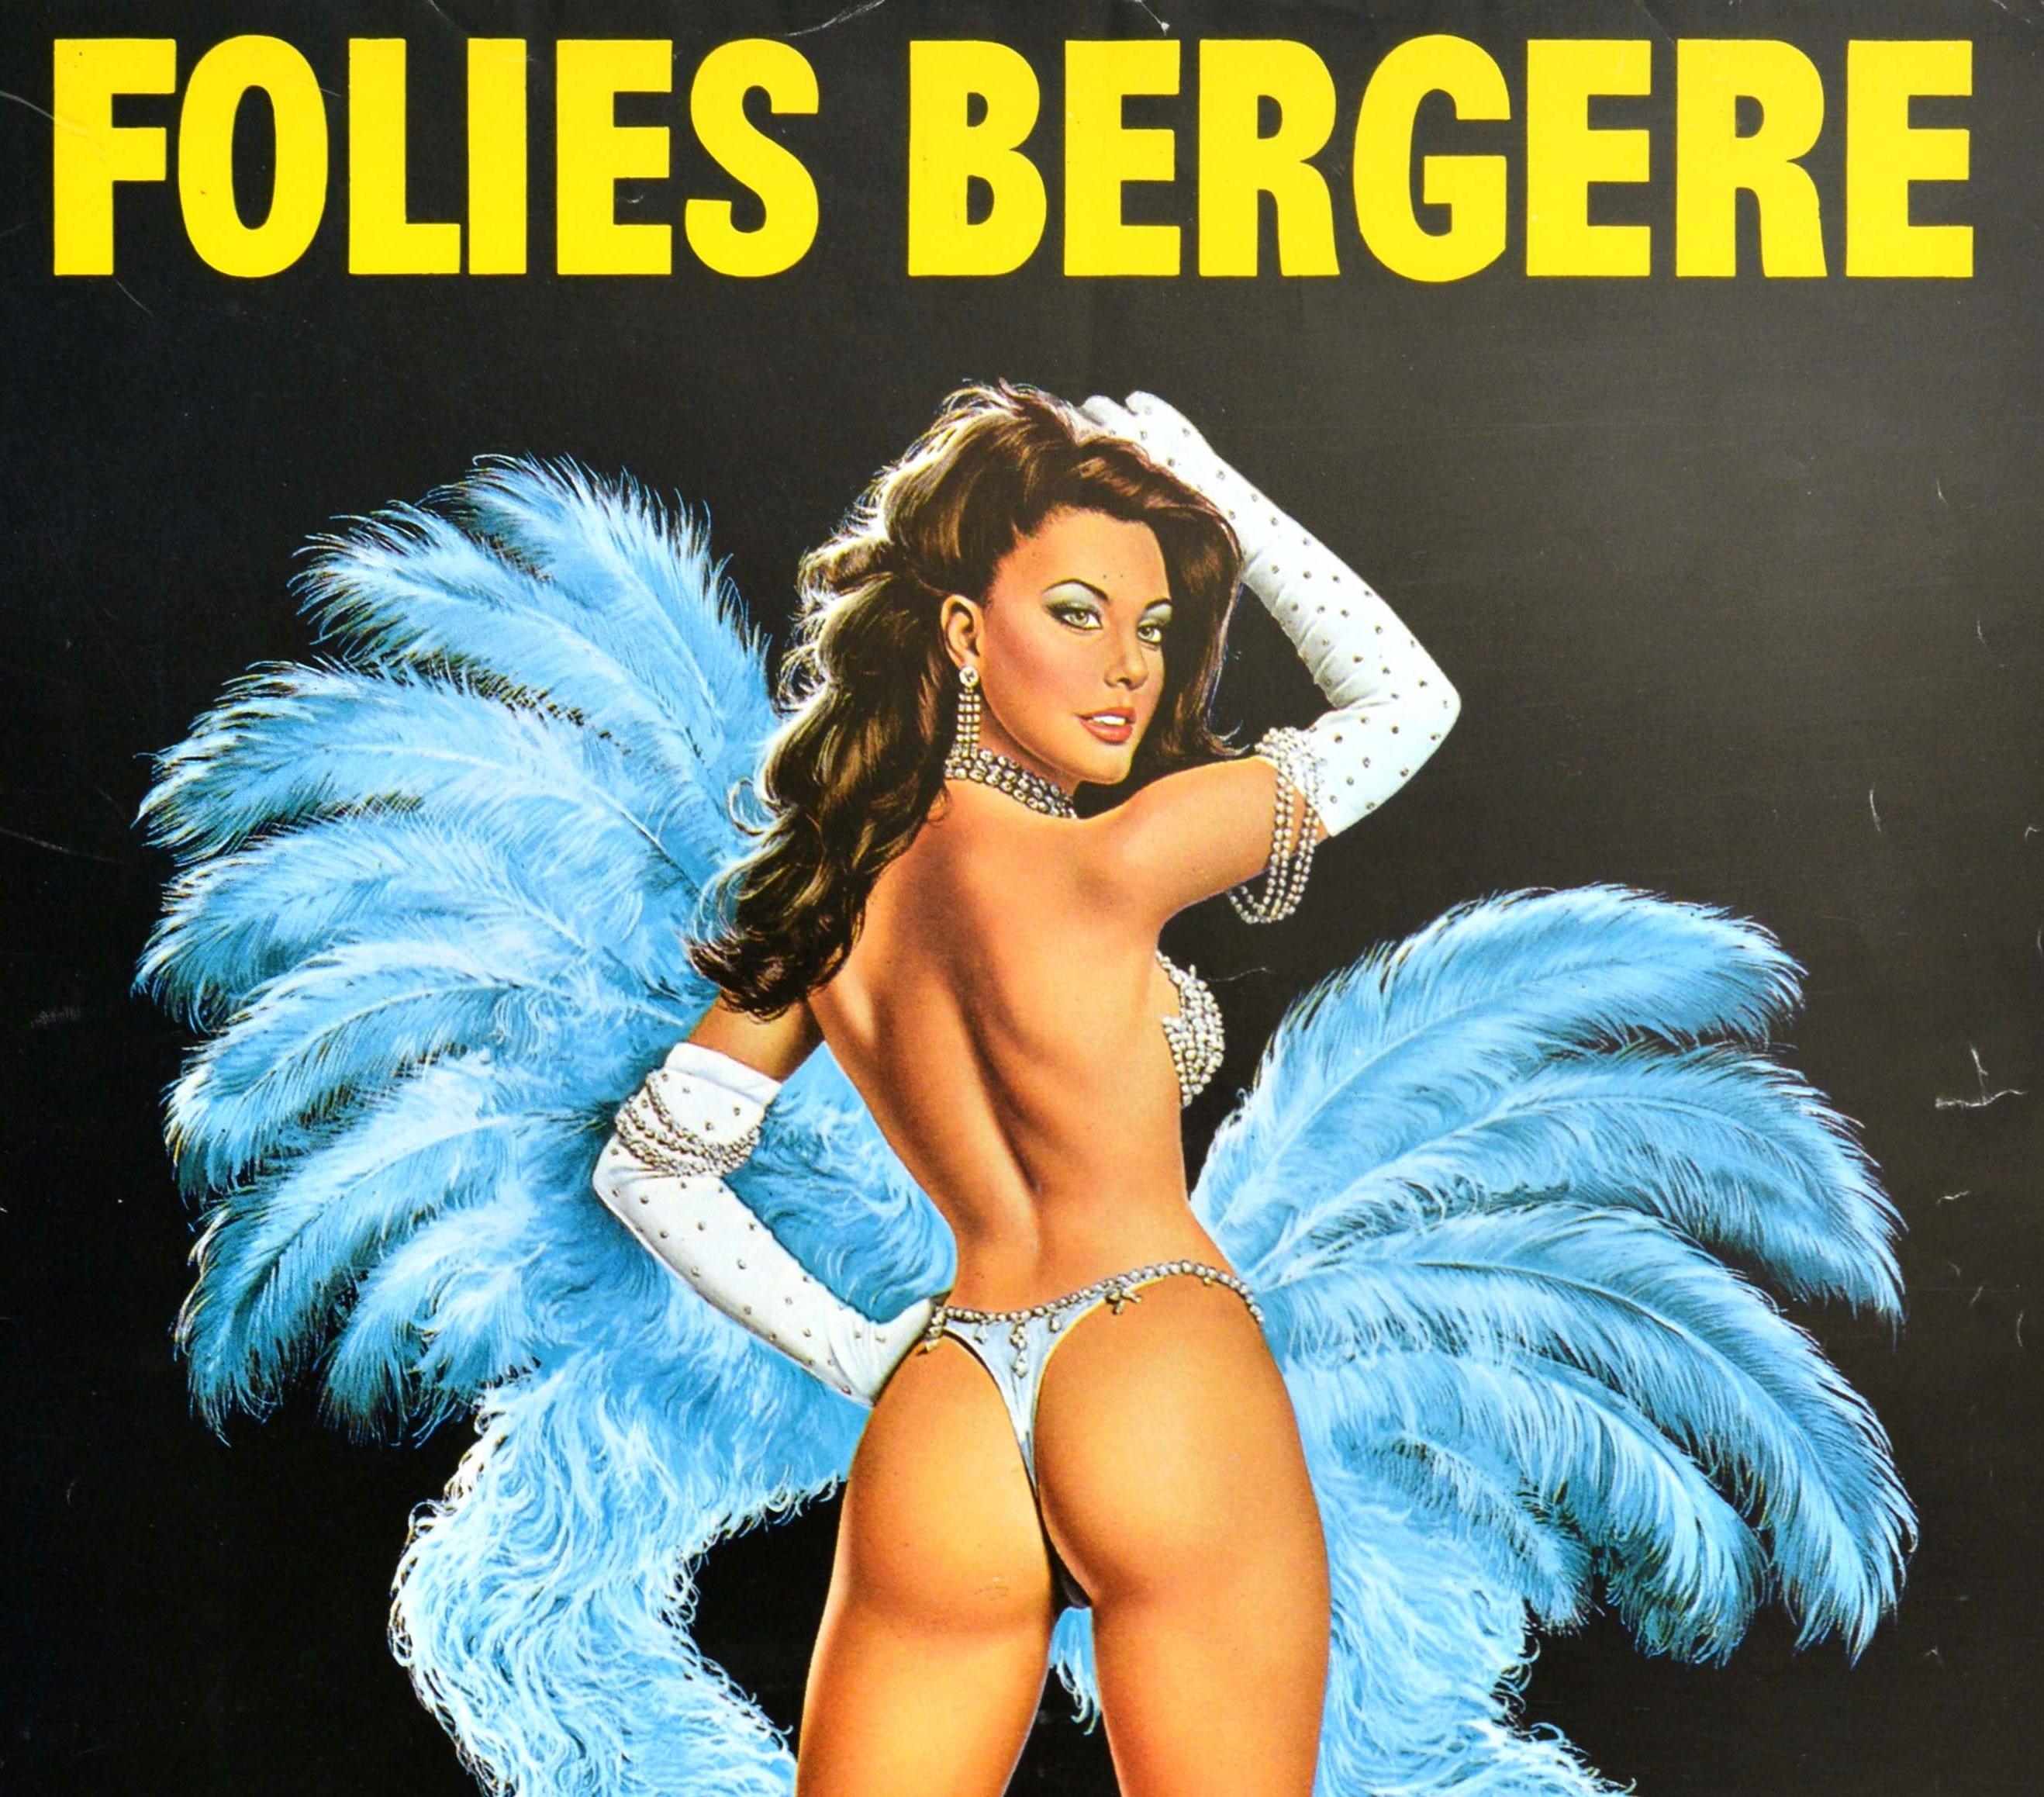 Original Vintage Poster Folies Bergere Paris Cabaret Showgirl Art Helene Martini - Print by Alain Gourdon